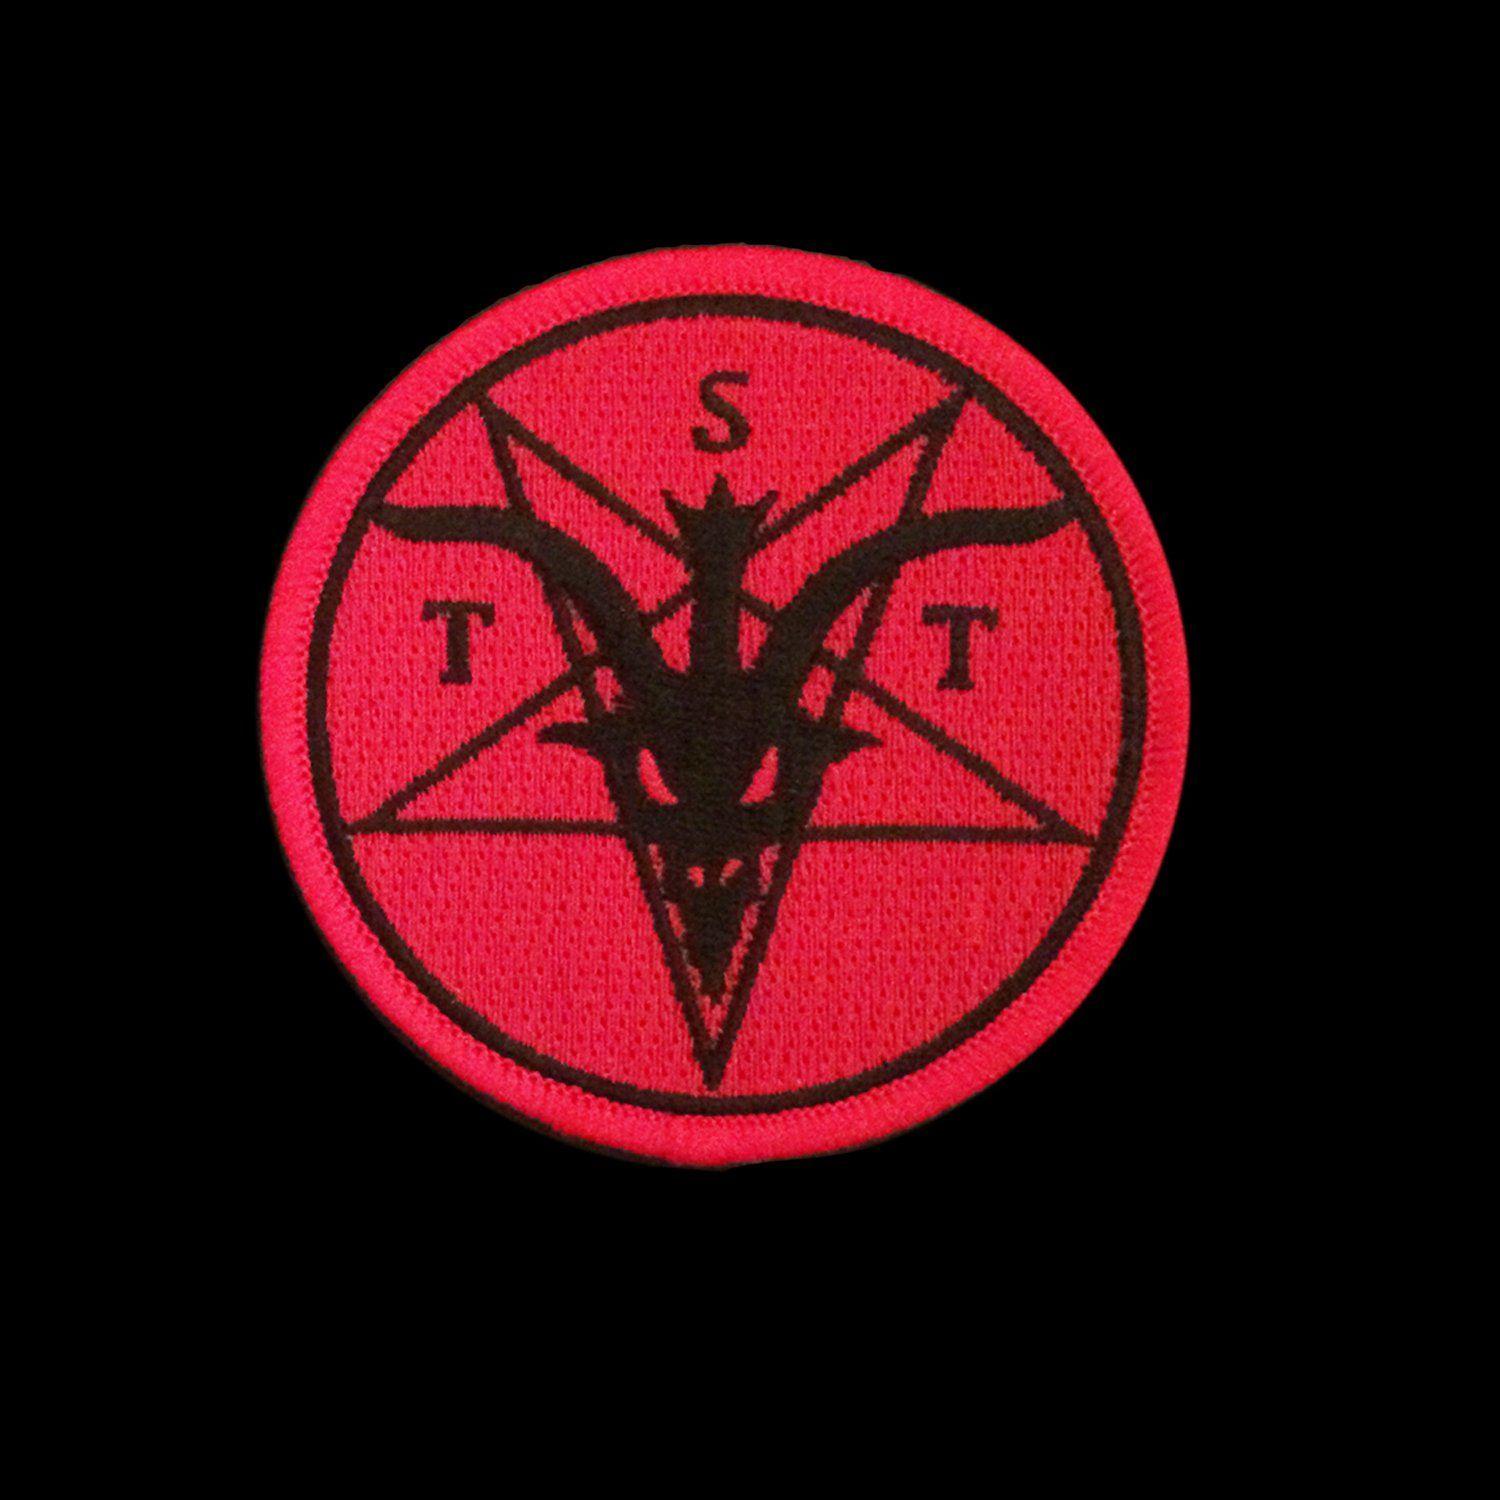 TST Logo - TST Logo Patch in Black or Red New Designs